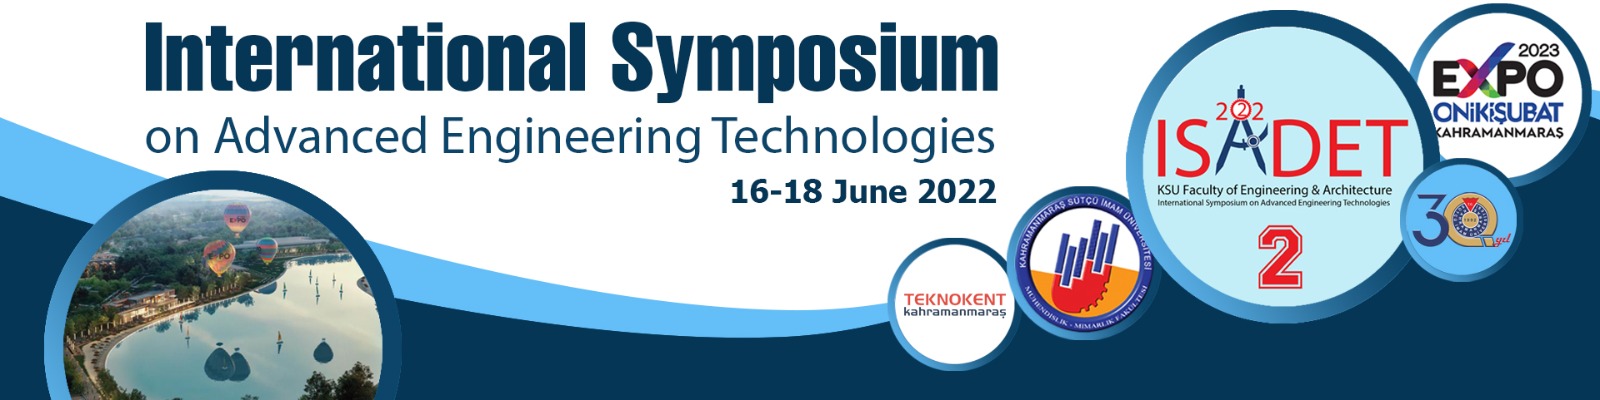 International Symposium on Advanced Engineering Technologies